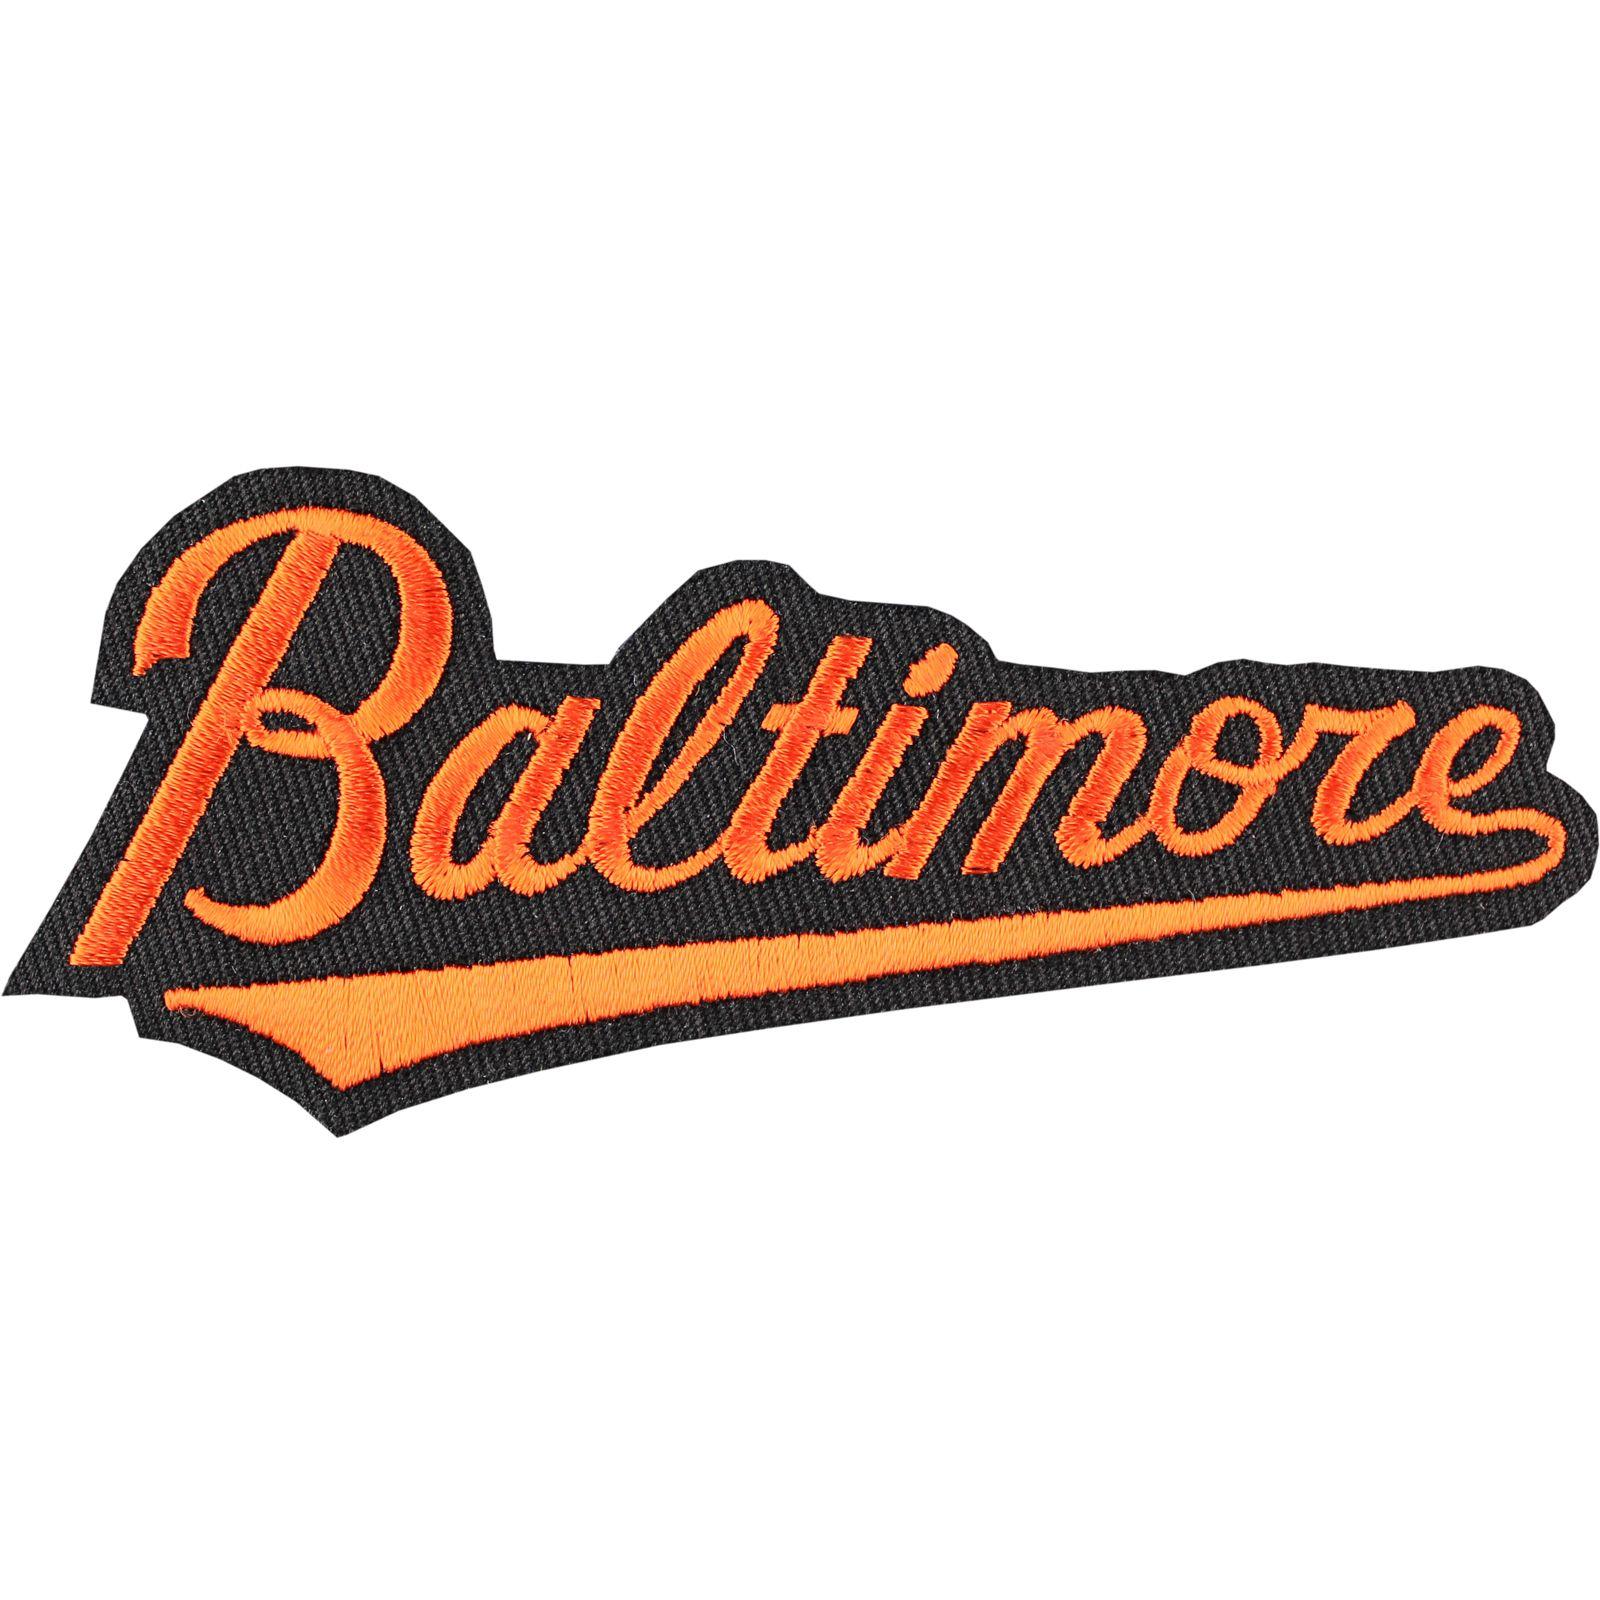 Black Word Logo - Baltimore Orioles Black Word Aleternate Logo Jersey Sleeve Patch MLB ...